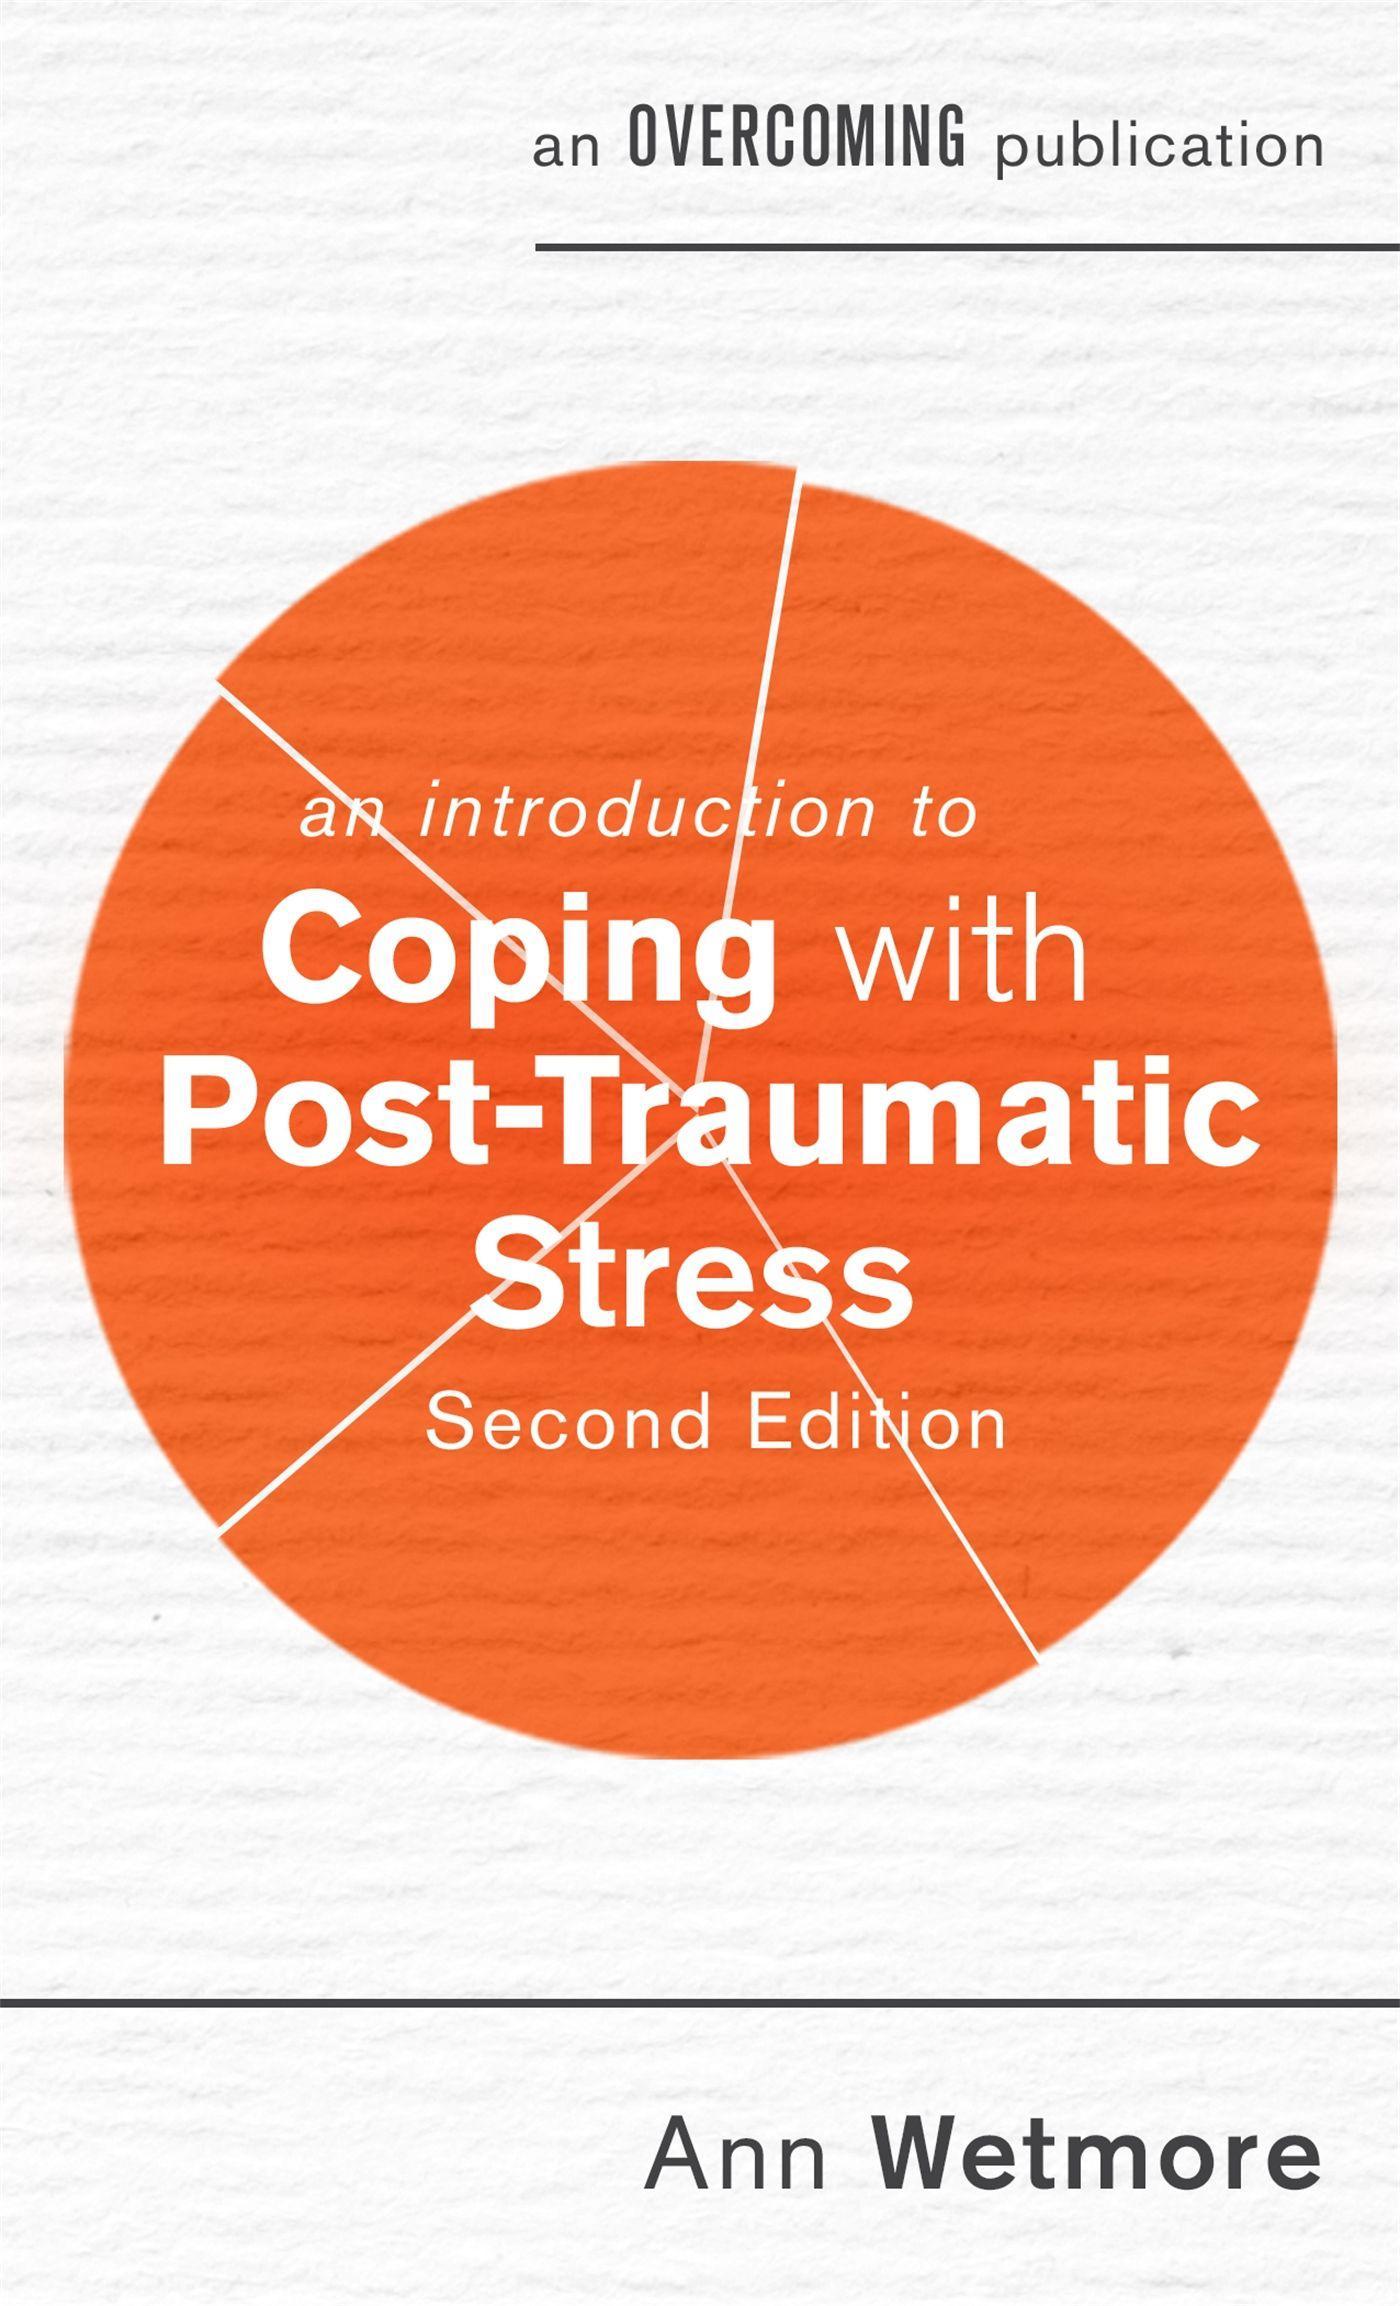 An Introduction to Coping with Post-Traumatic Stress, 2nd Edition / Ann Wetmore / Taschenbuch / Kartoniert / Broschiert / Englisch / 2019 / Little, Brown Book Group / EAN 9781472140166 - Wetmore, Ann